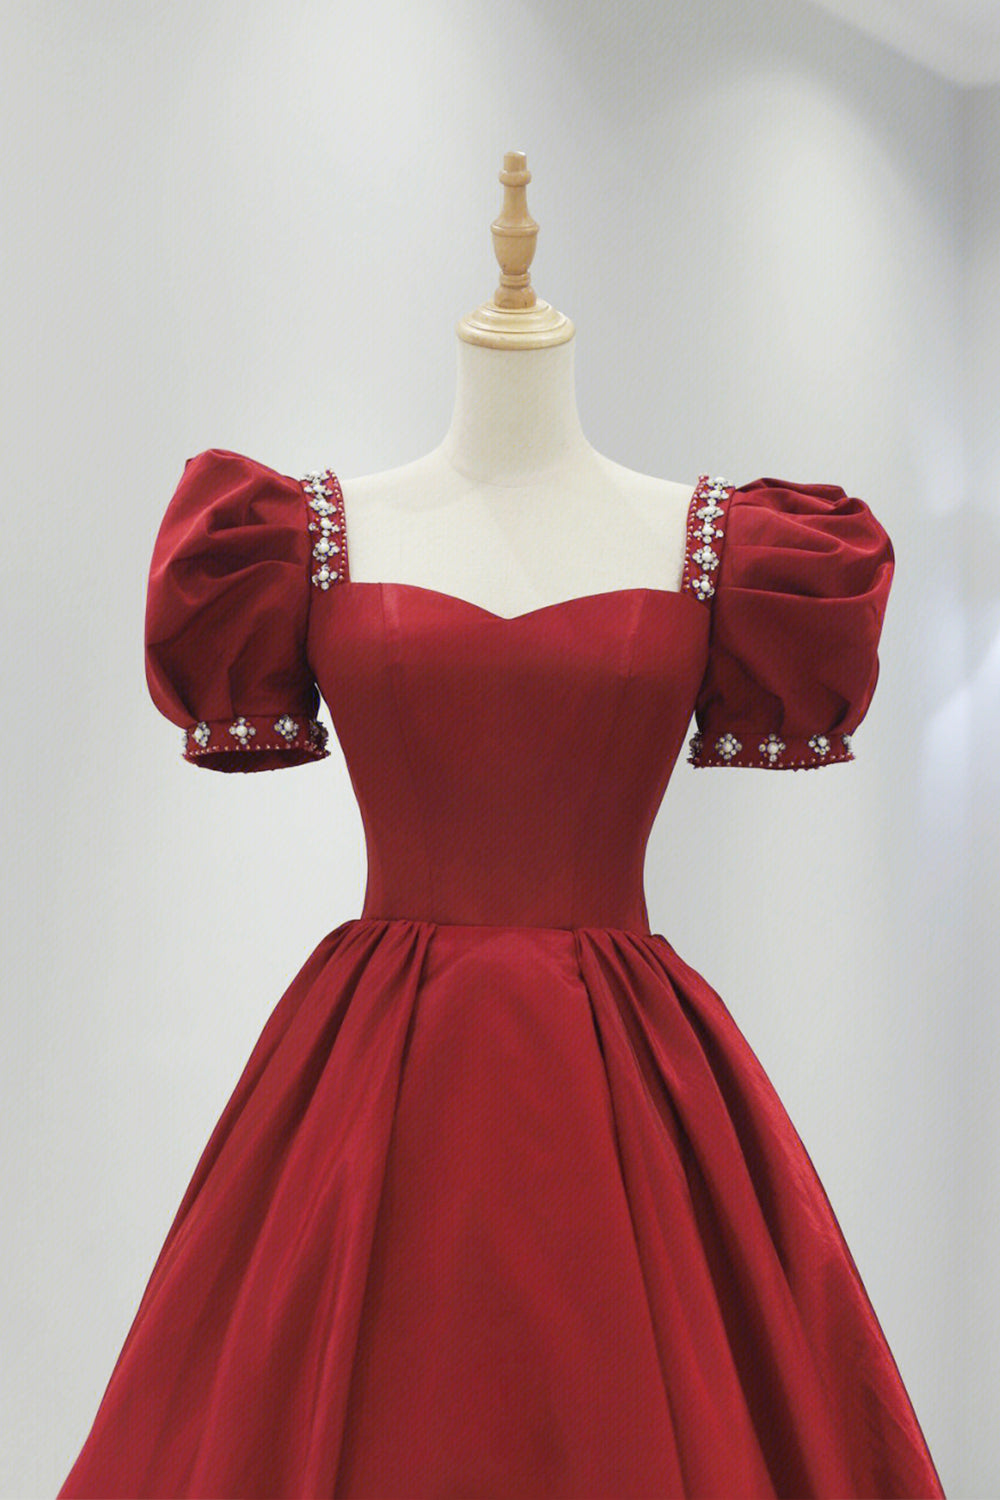 Burgundy Satin Long Prom Dress Outfits For Girls, A-Line Short Sleeve Evening Dress